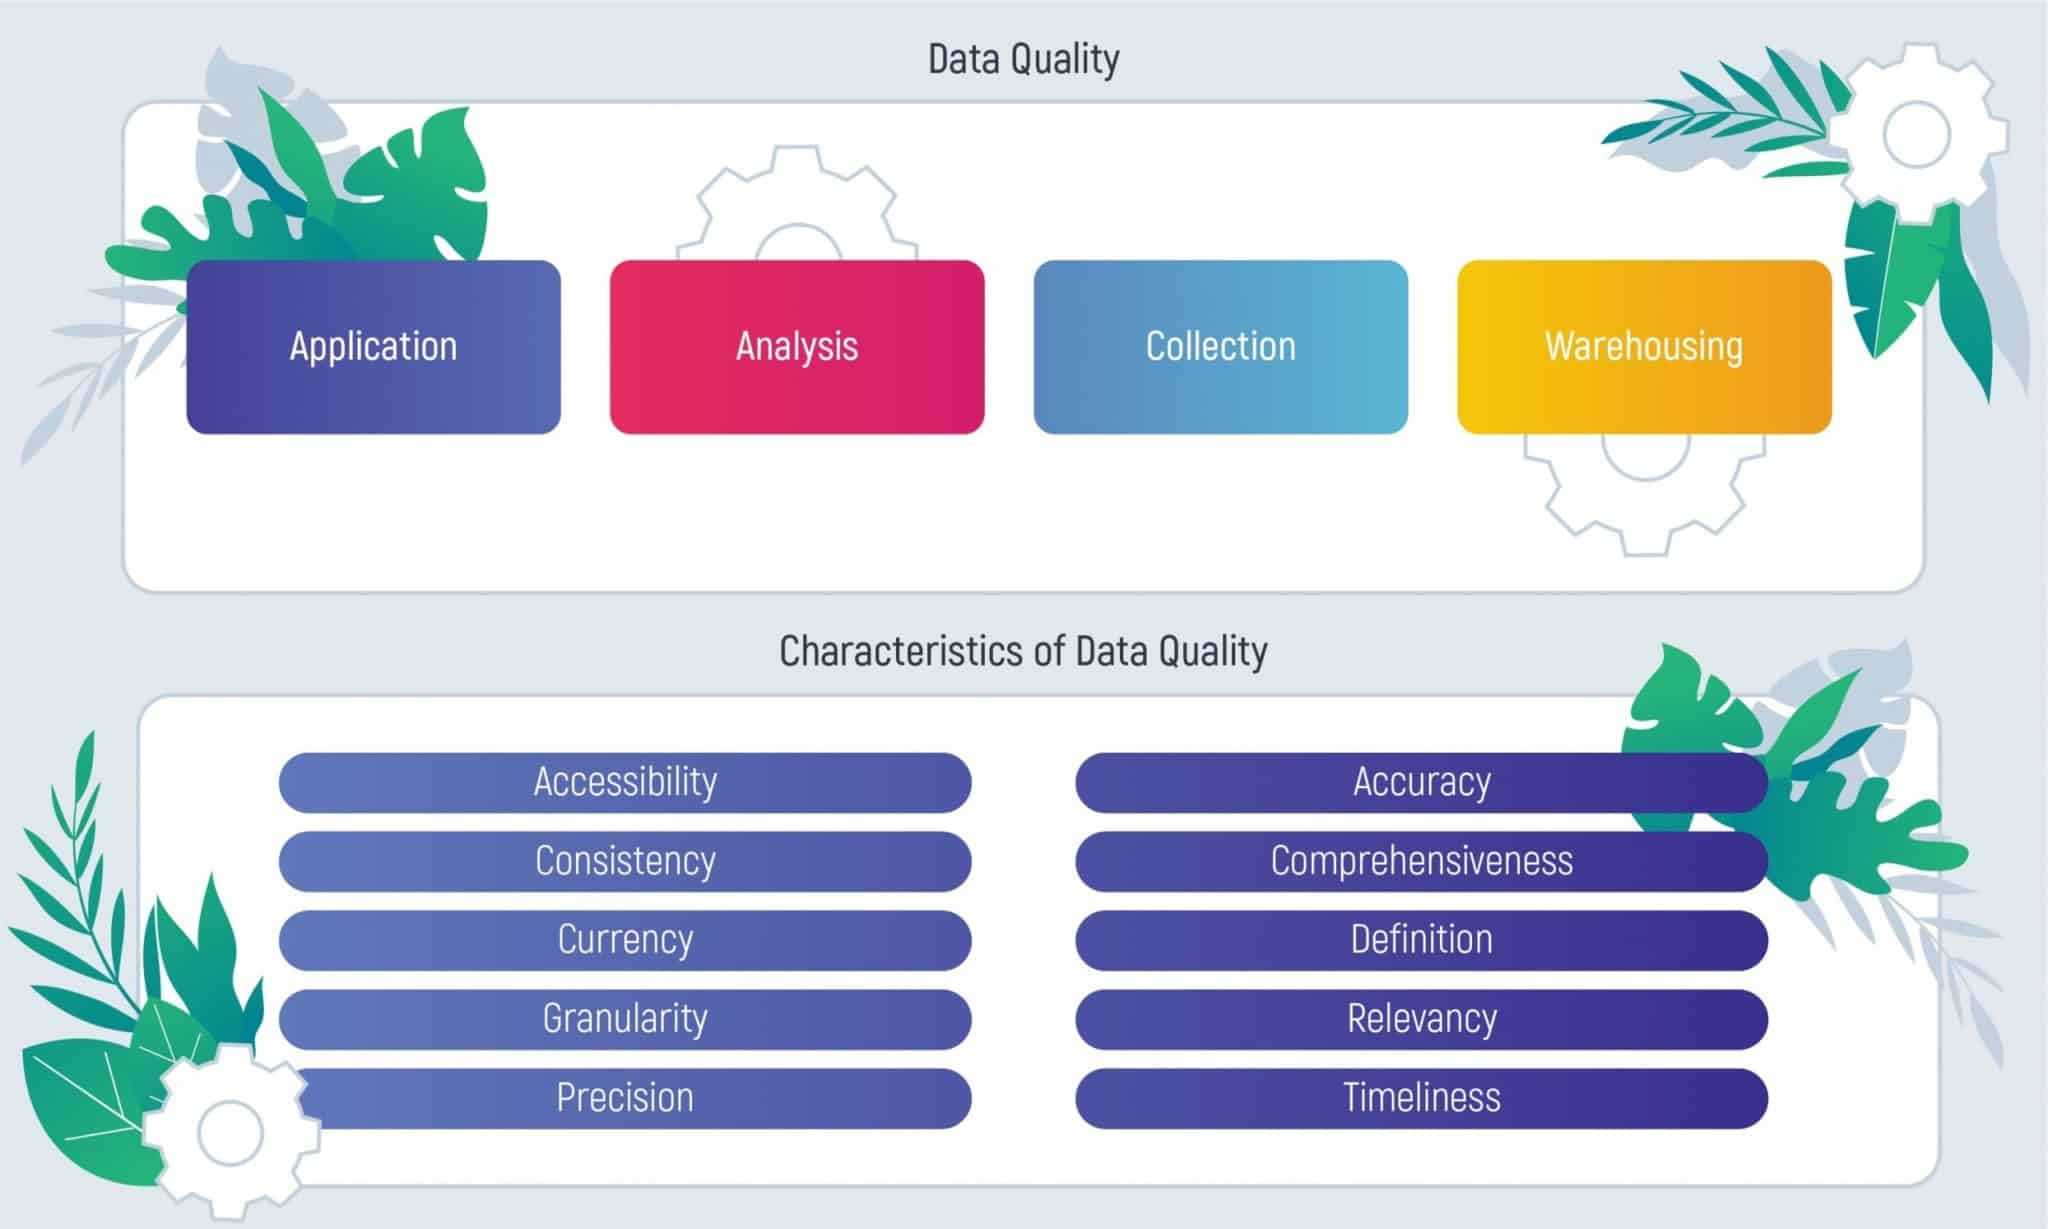 Data Quality / Characteristics of Data Quality